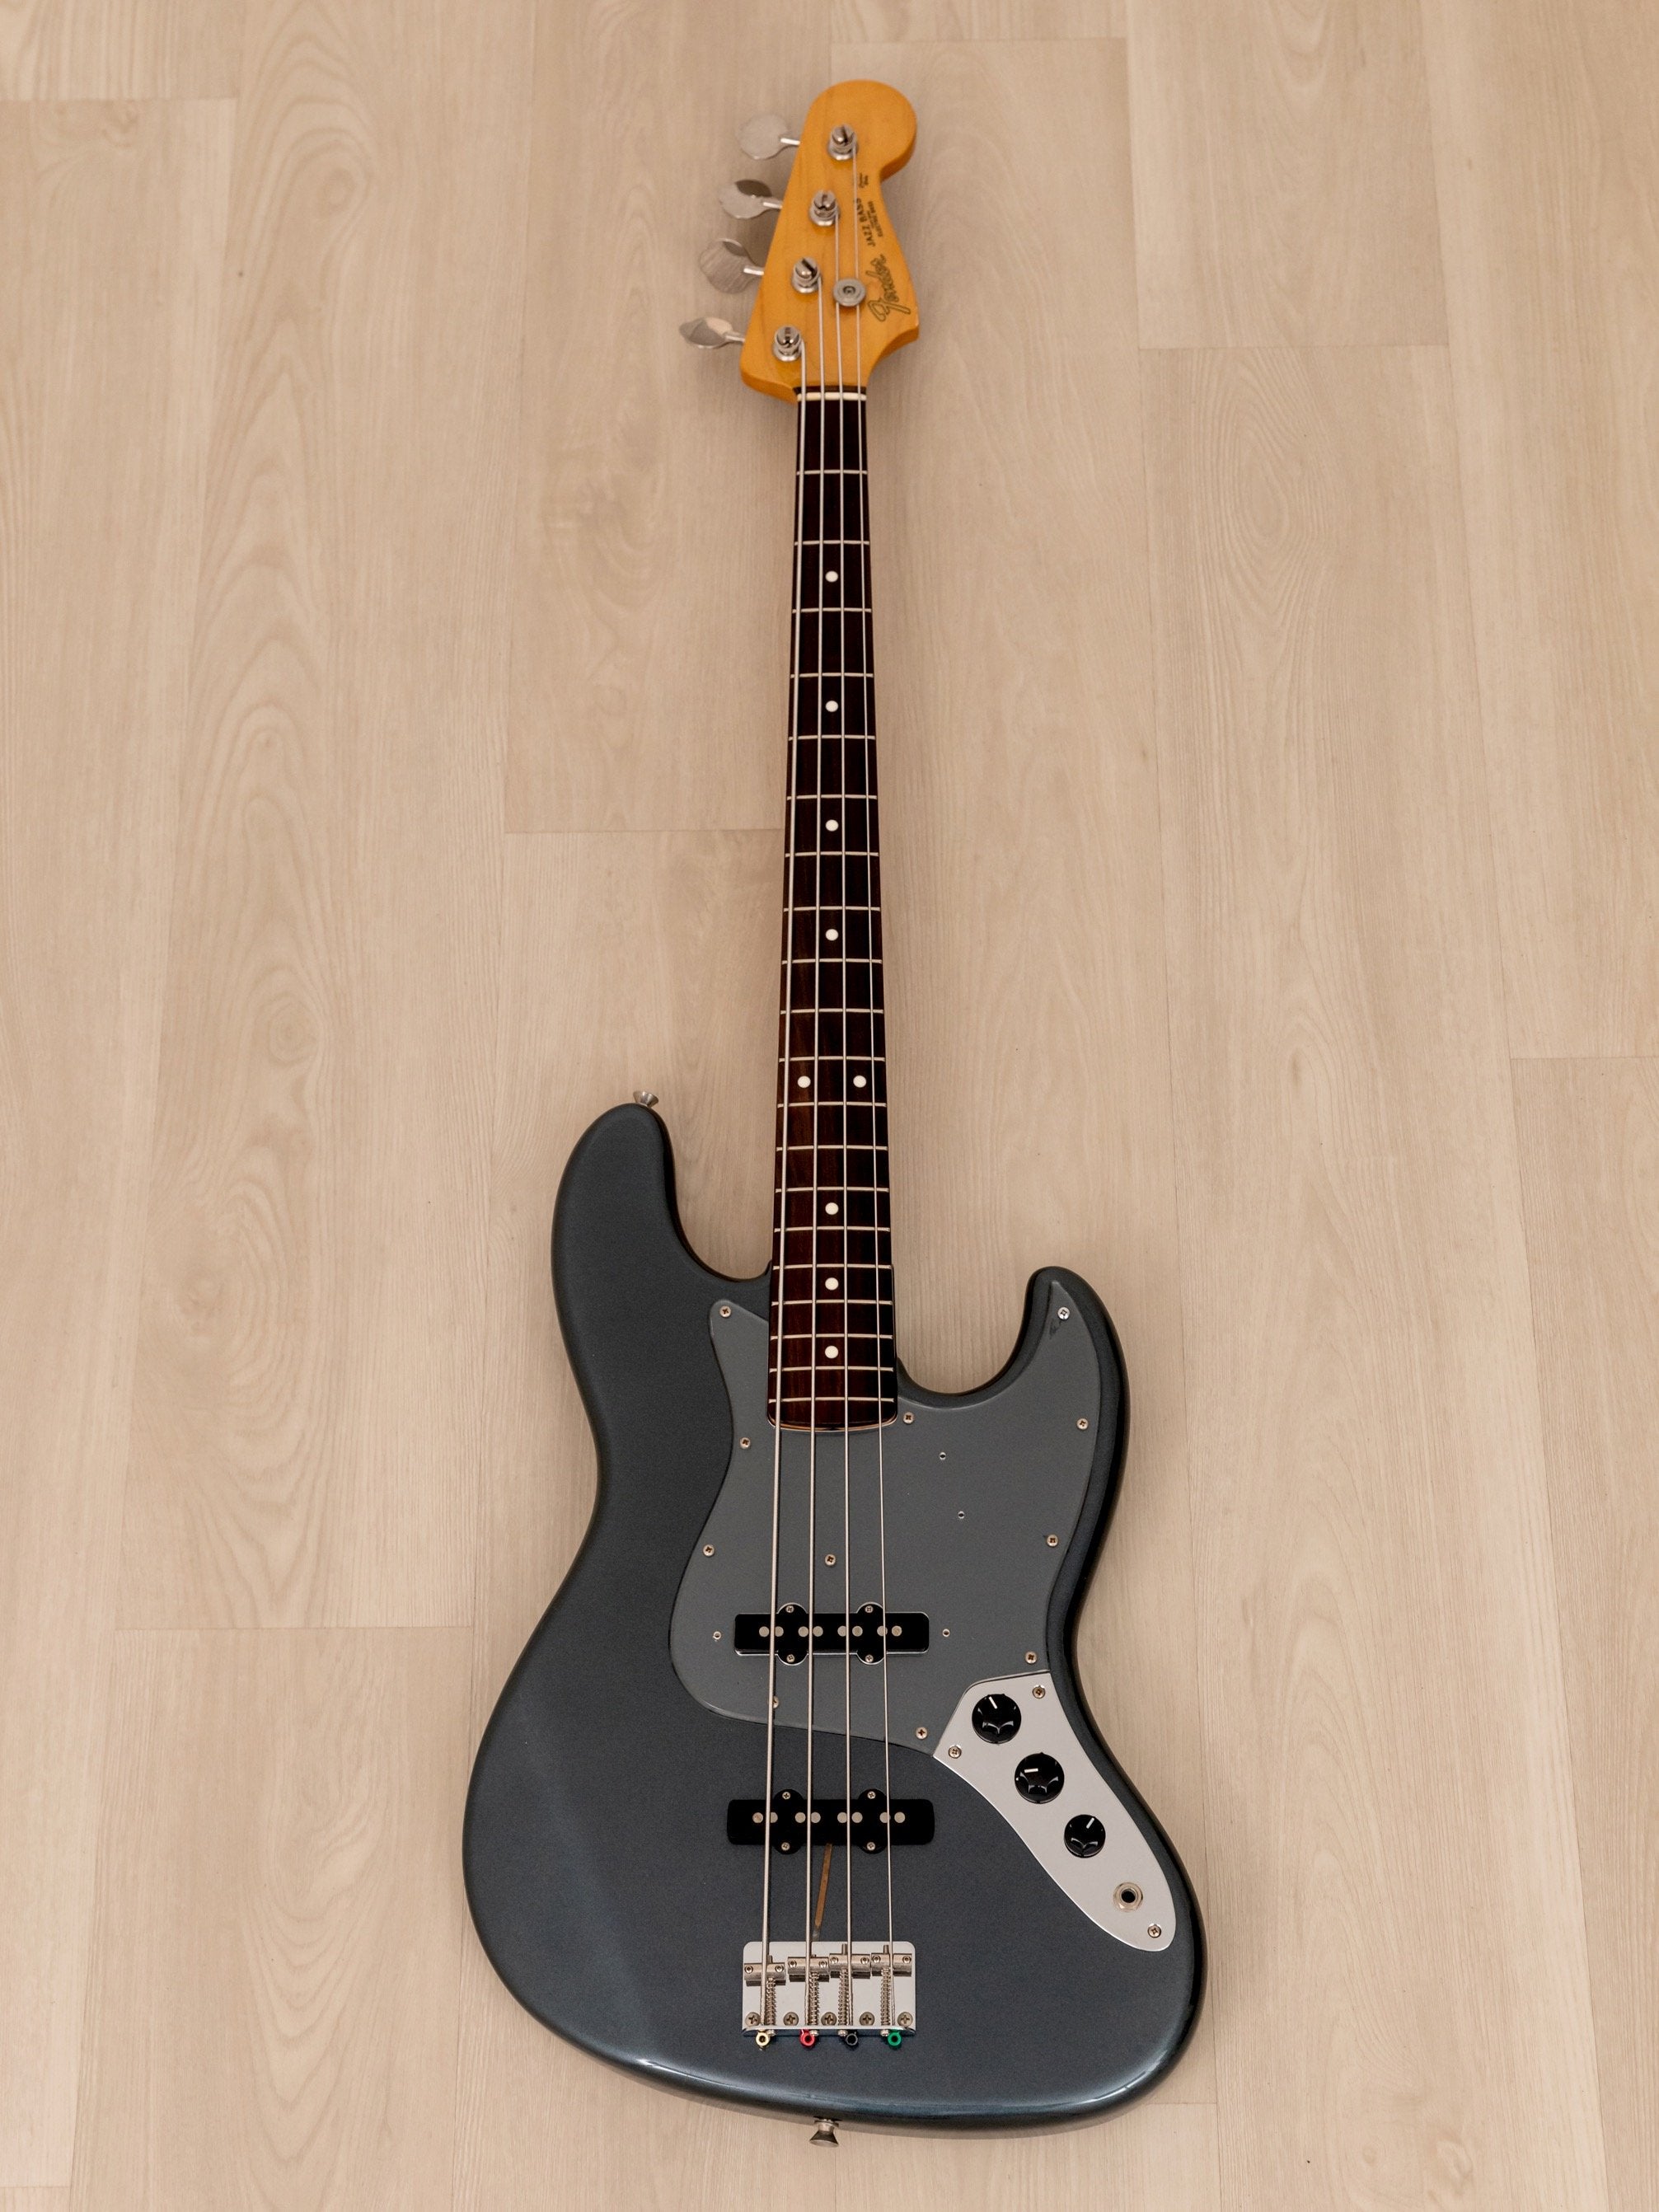 2010 Fender Jazz Bass '62 Vintage Reissue JB62, Gunmetal Blue, Japan MIJ